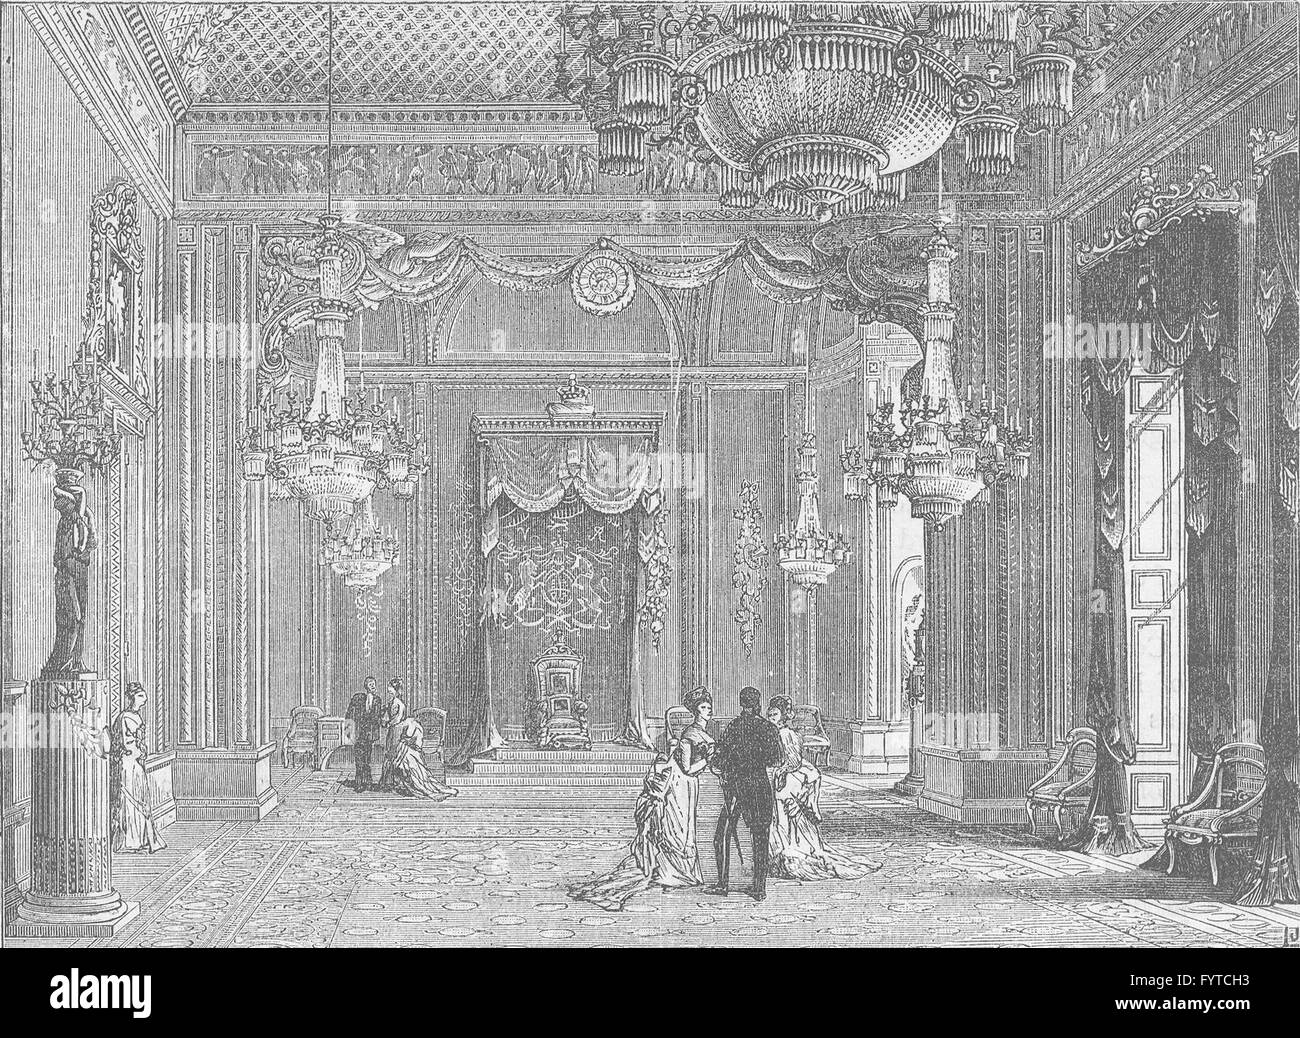 Buckingham palace throne room Black and White Stock Photos & Images - Alamy